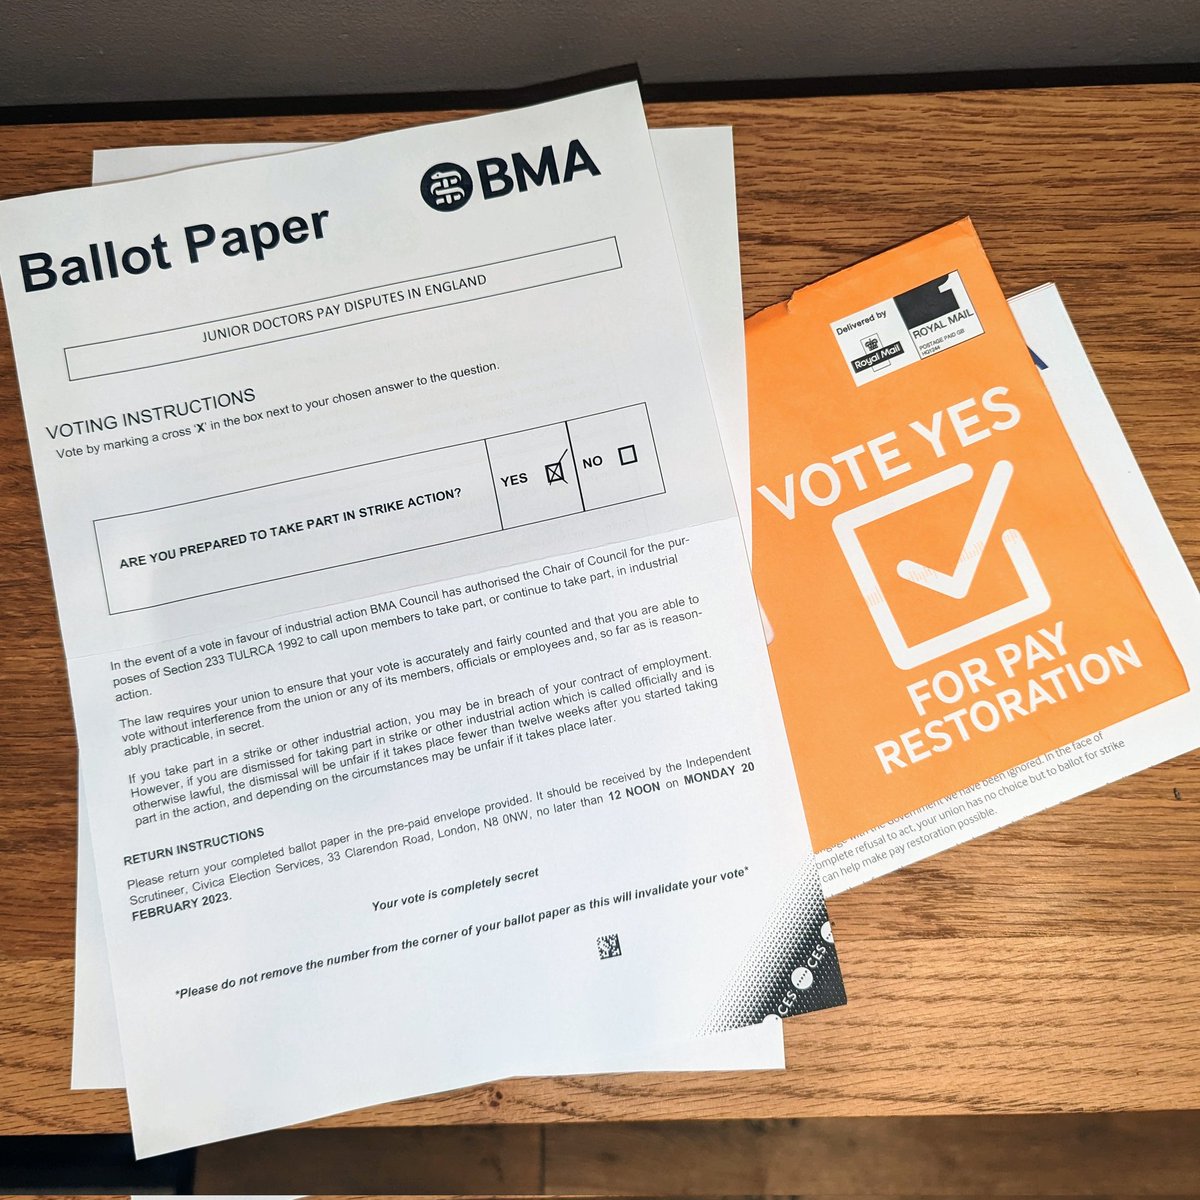 I've voted YES to #PayRestoration! ✊

#BMADoctorsVoteYes